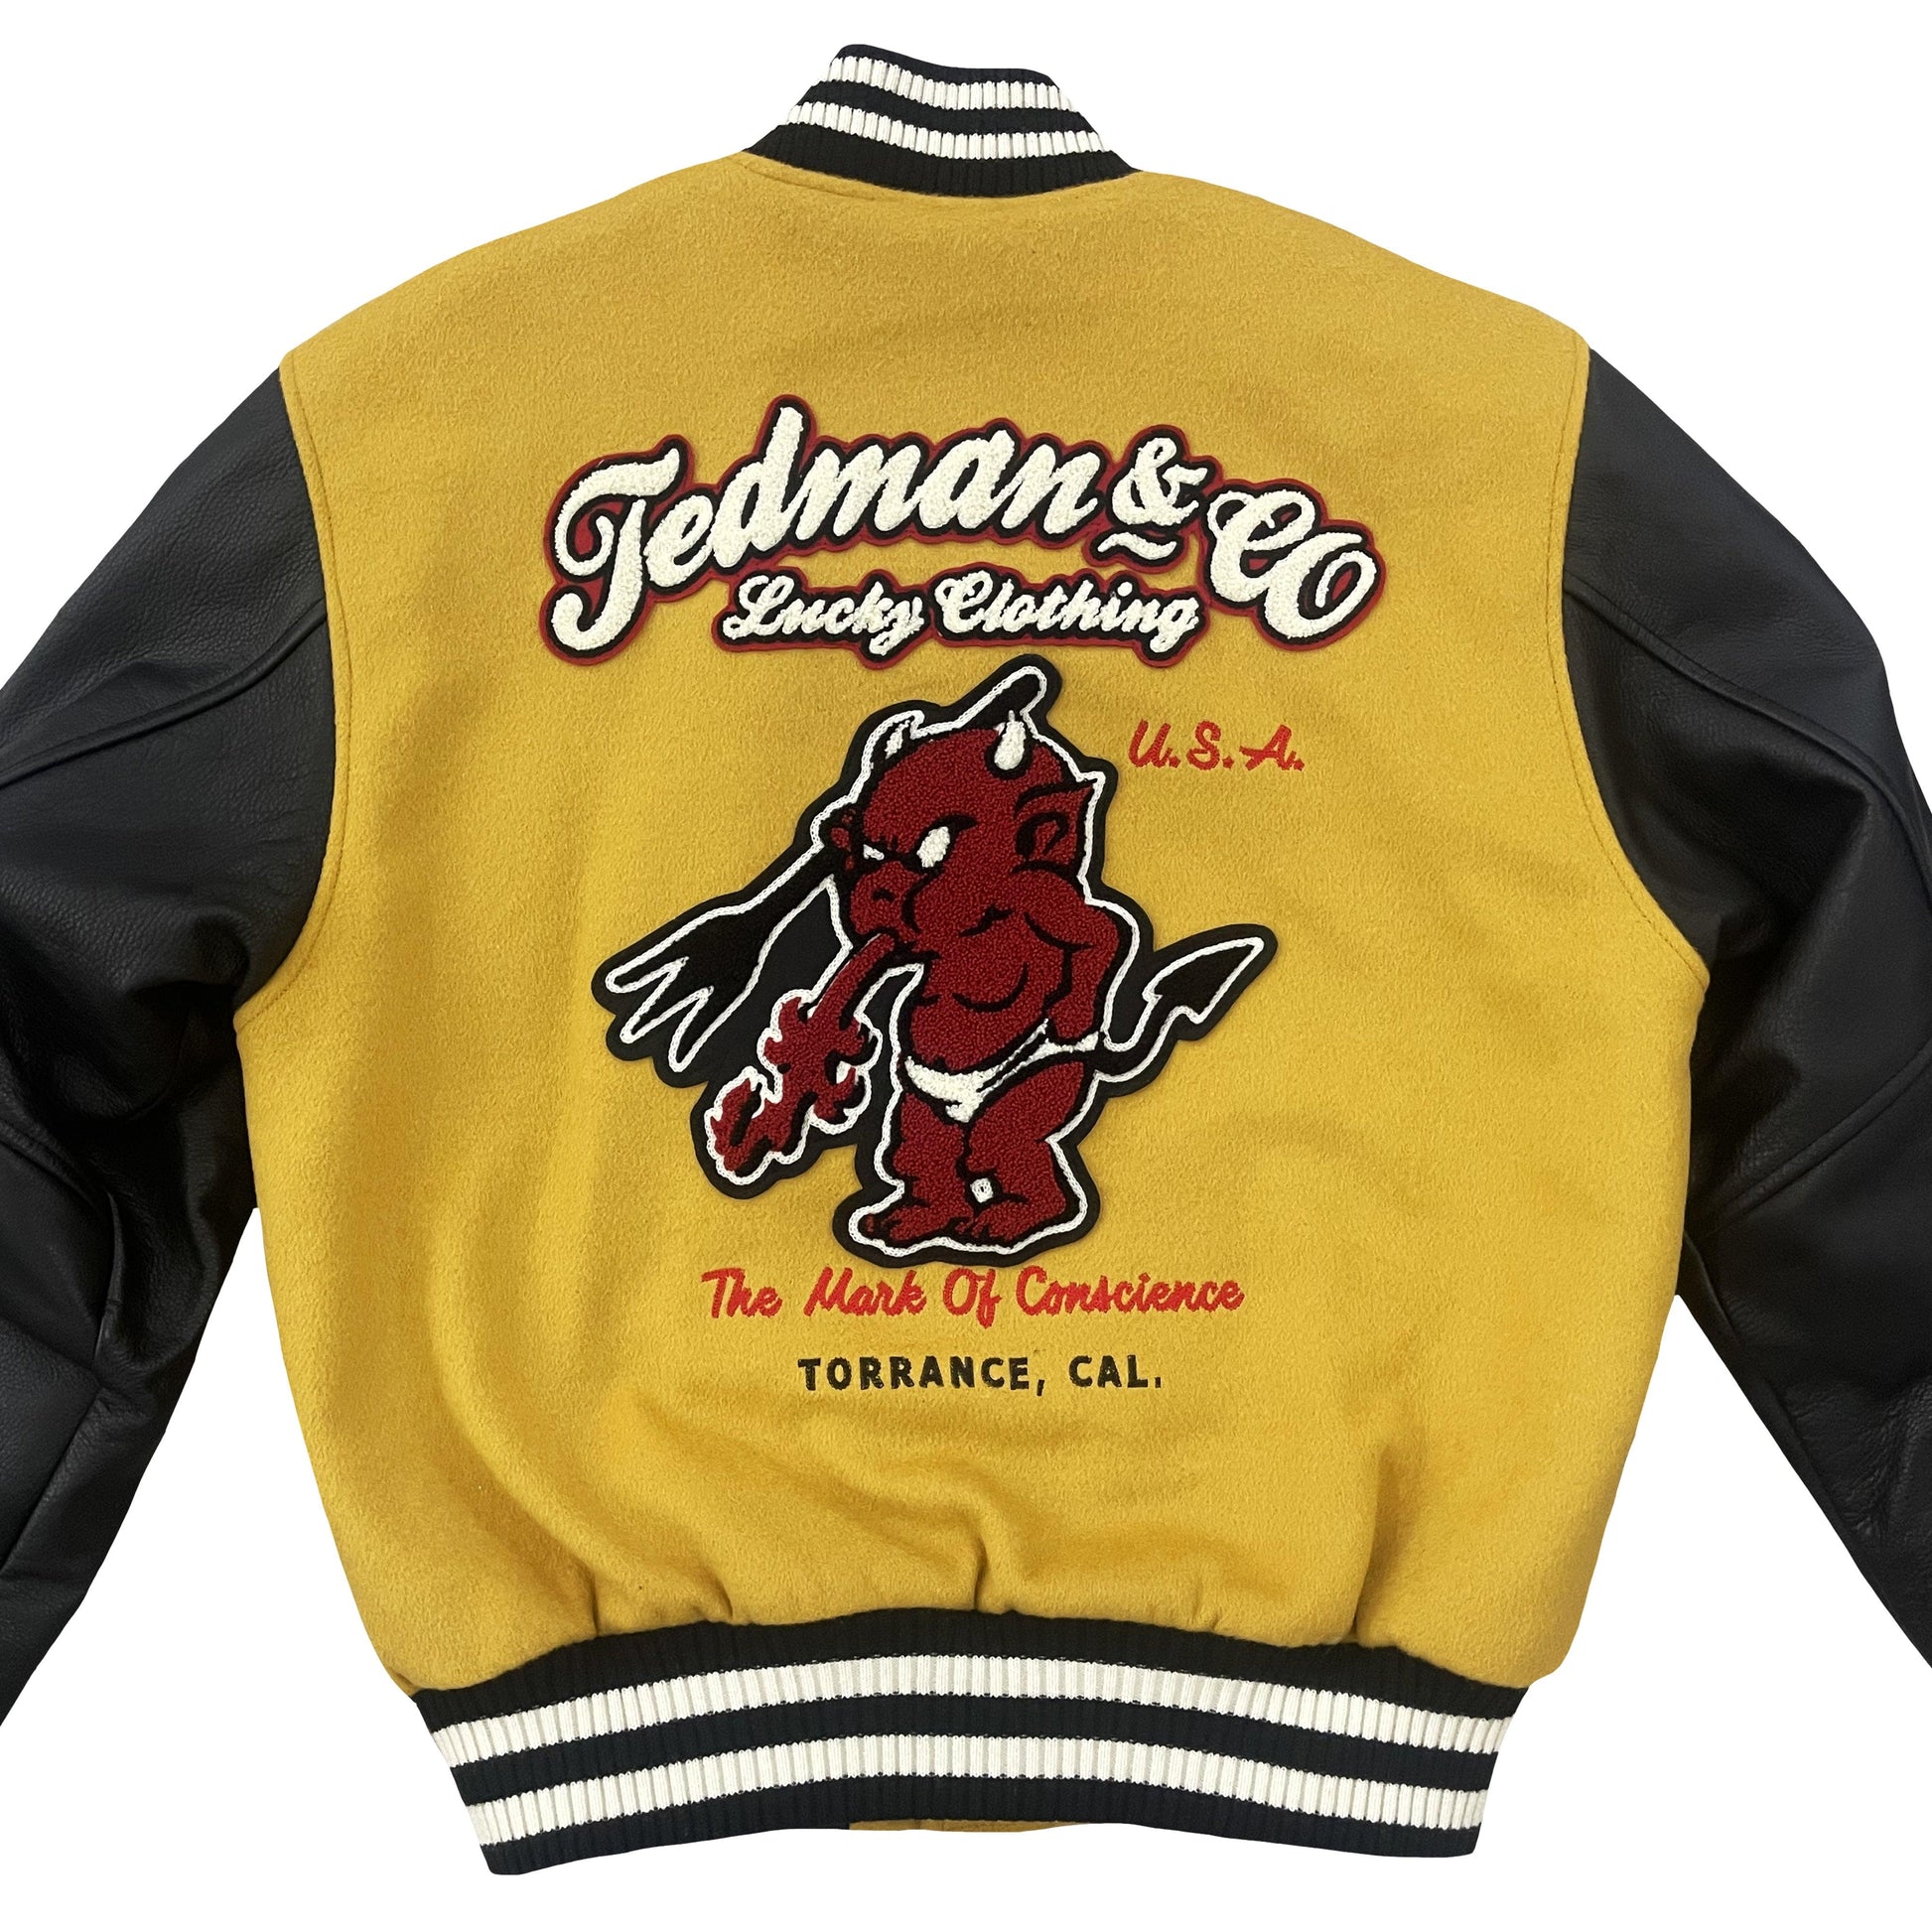 Tedman's Varsity Jacket - Known Source